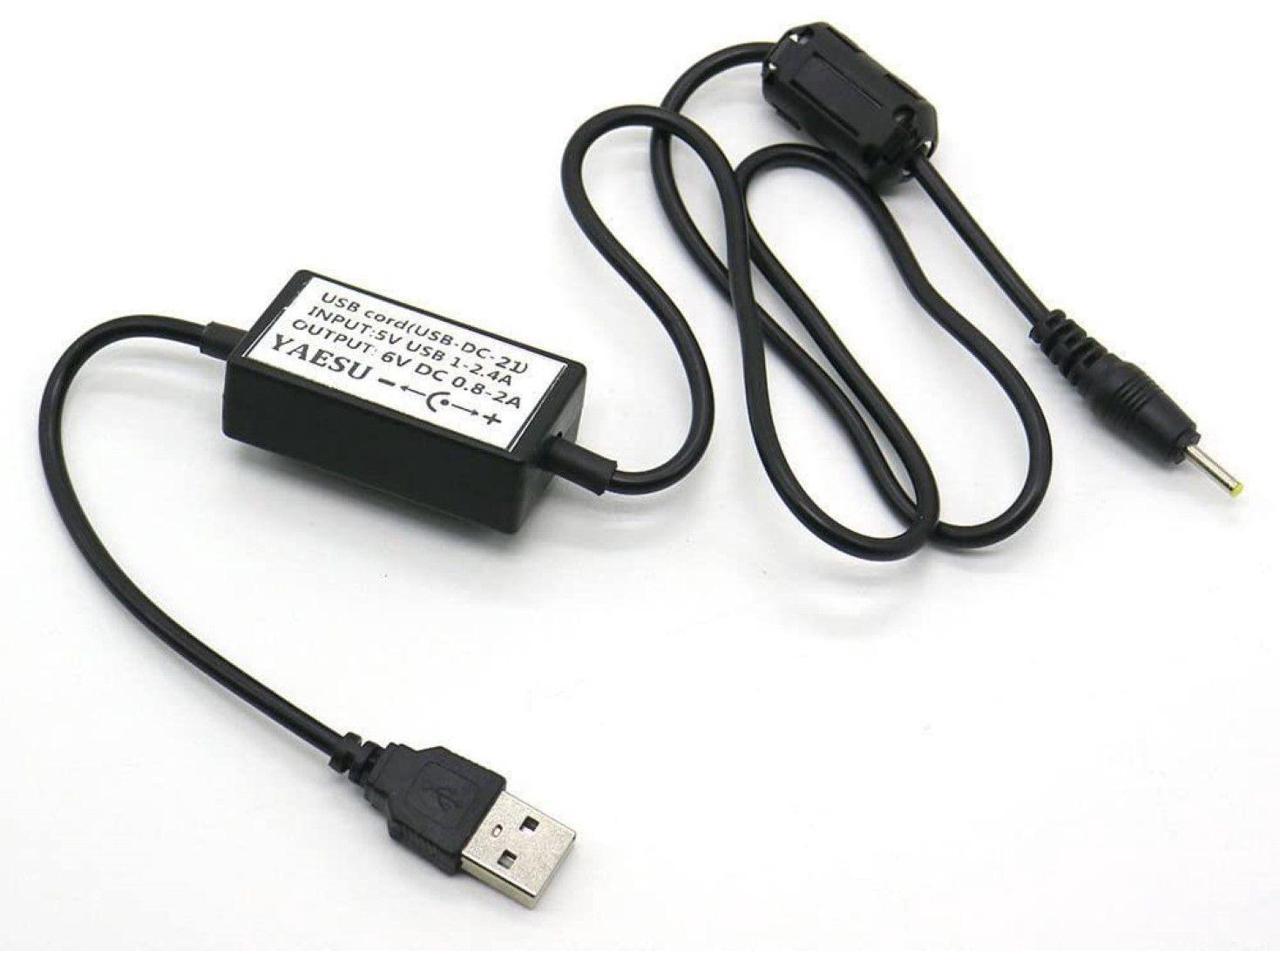 4ft Mini USB Lead For Nikon D3000 D3100 D3100s D7000 Camera USB Data Cable Cord